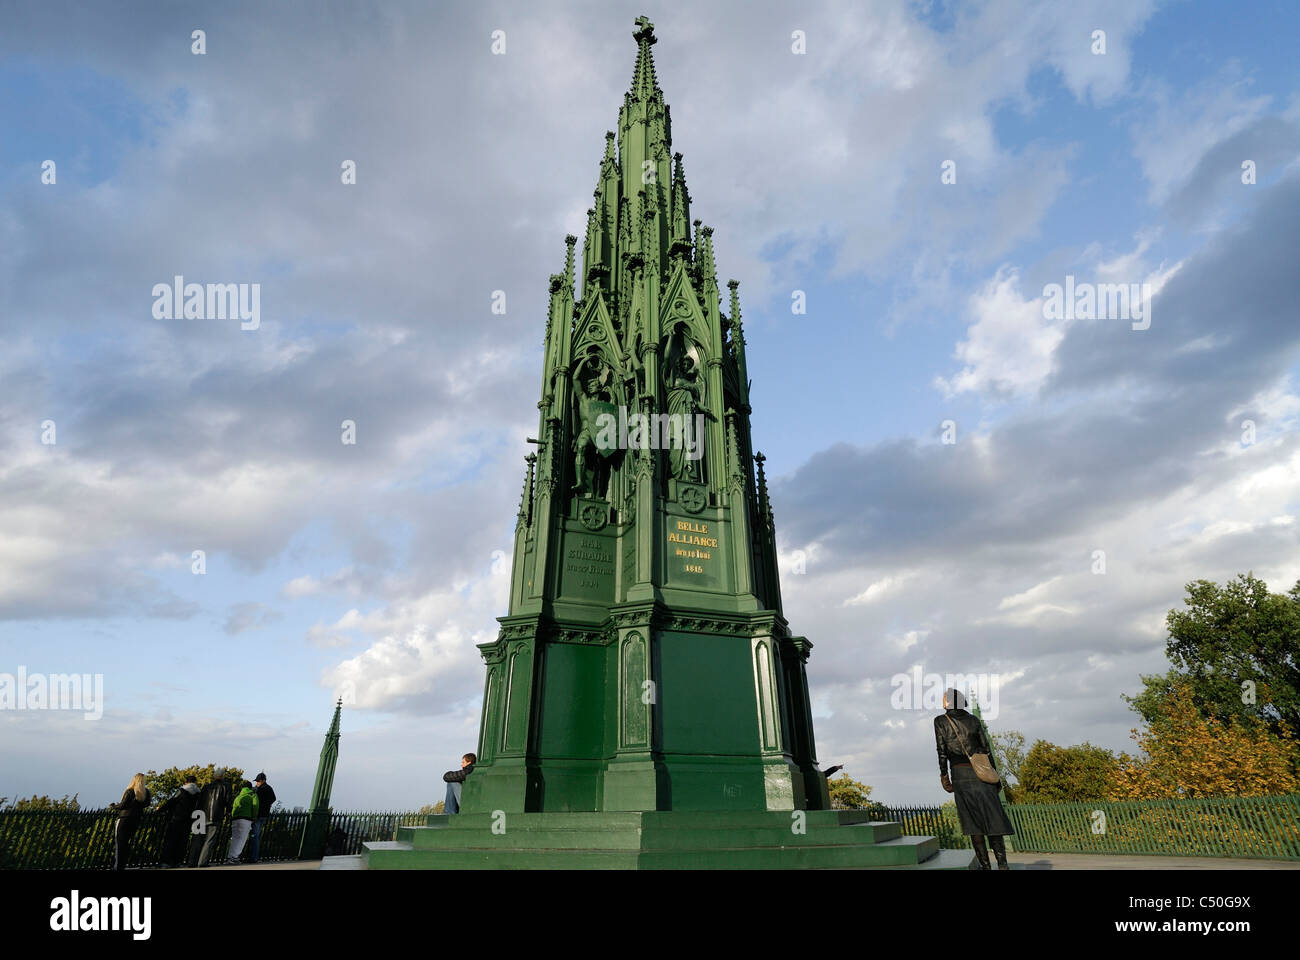 Berlin. Germany. The Kreuzberg monument (1821) in Viktoria Park commemorates victory over Napoleon. Stock Photo